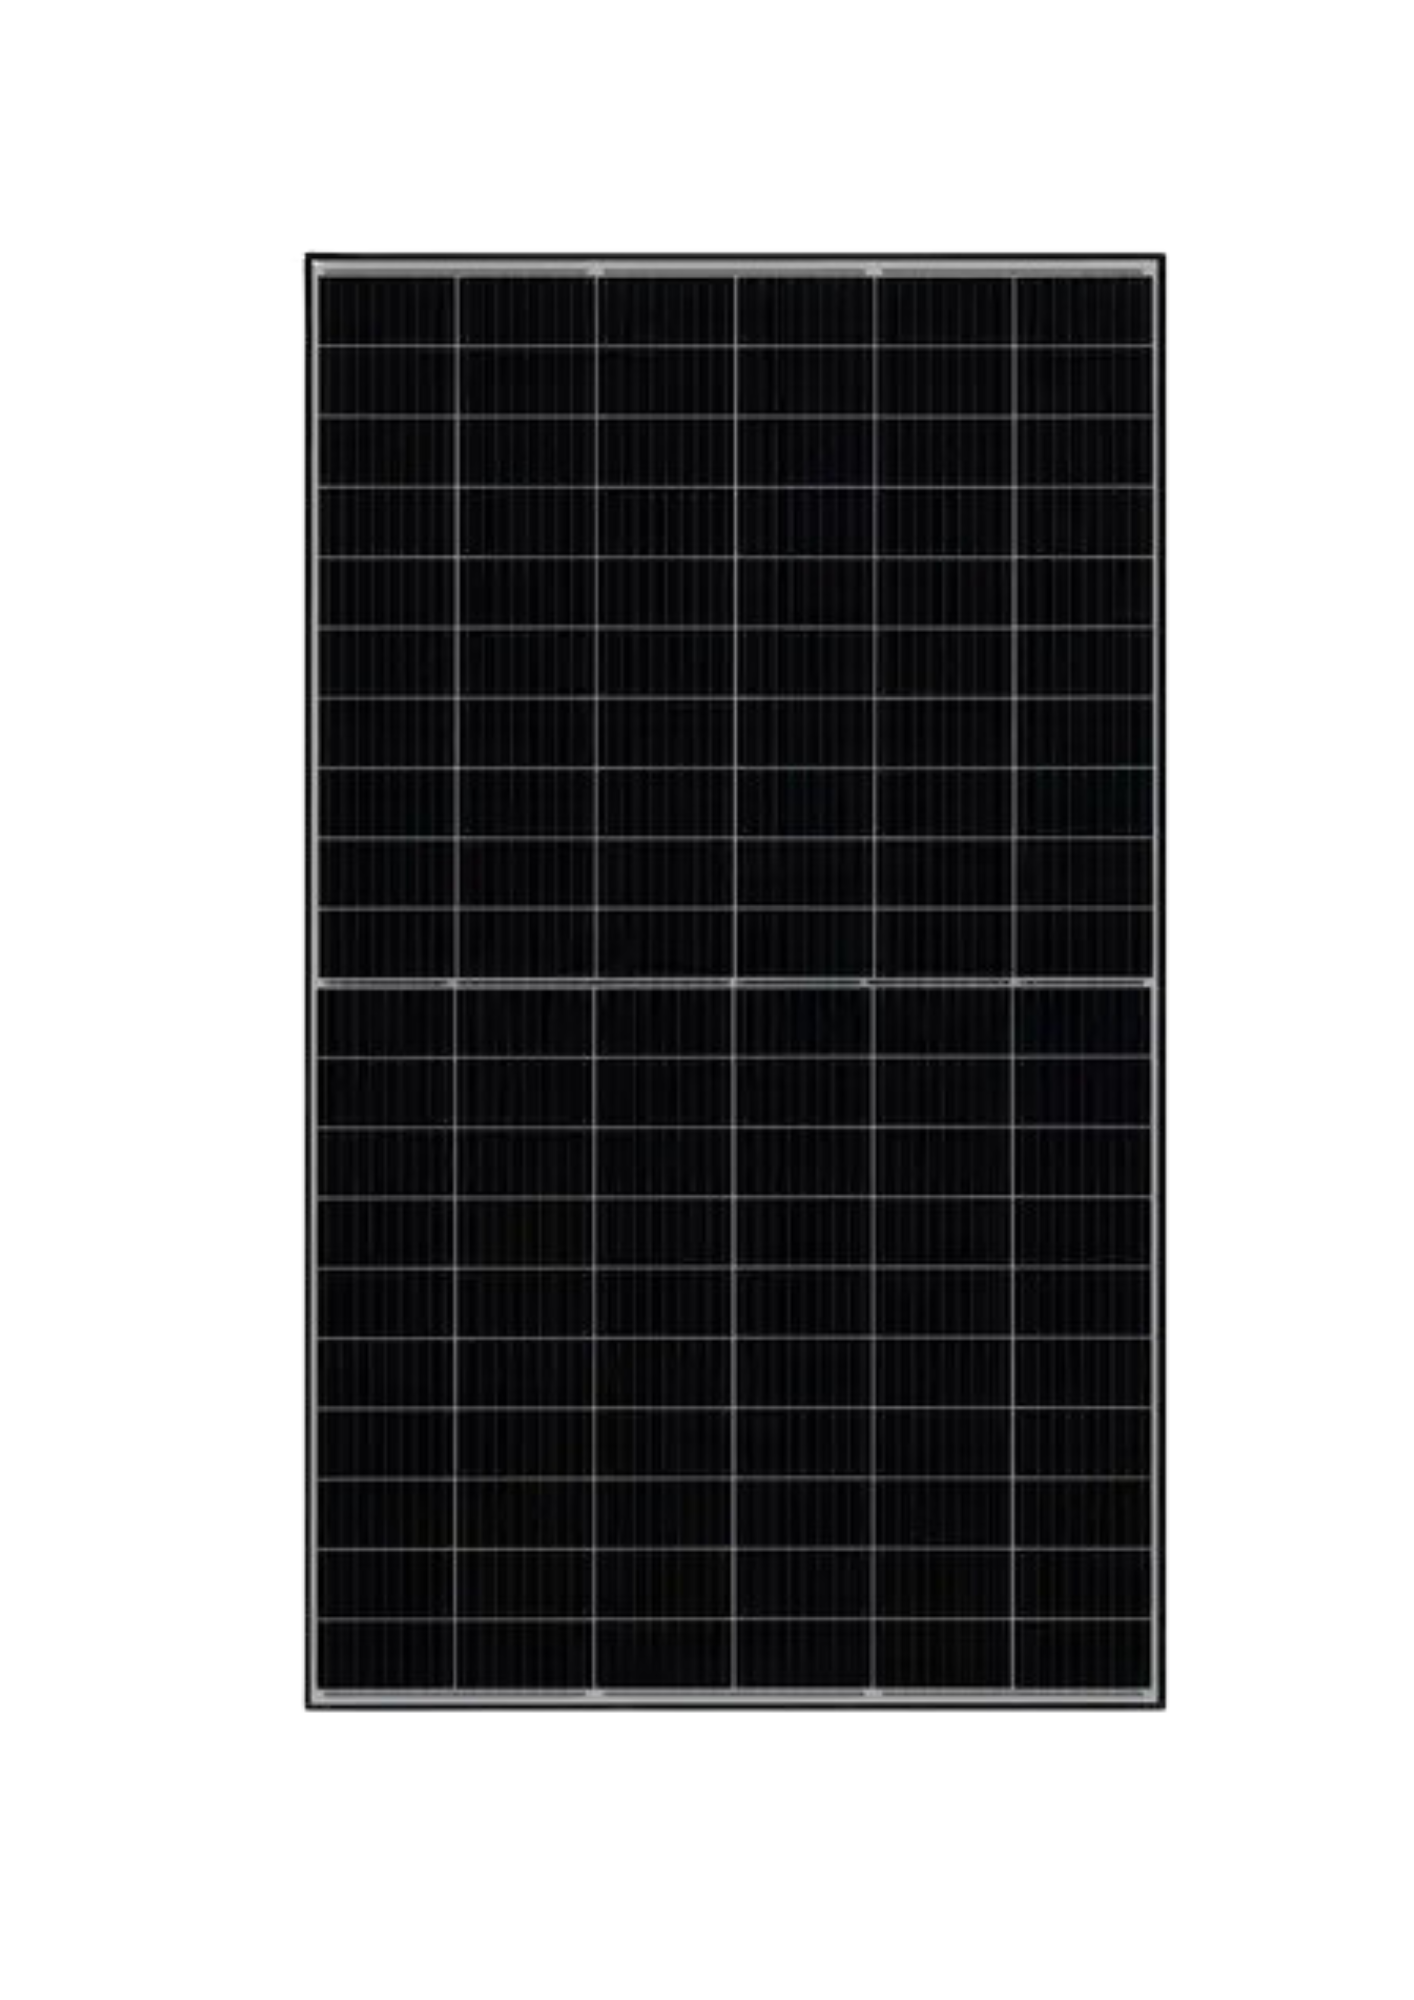 Image of a singular solar panel 